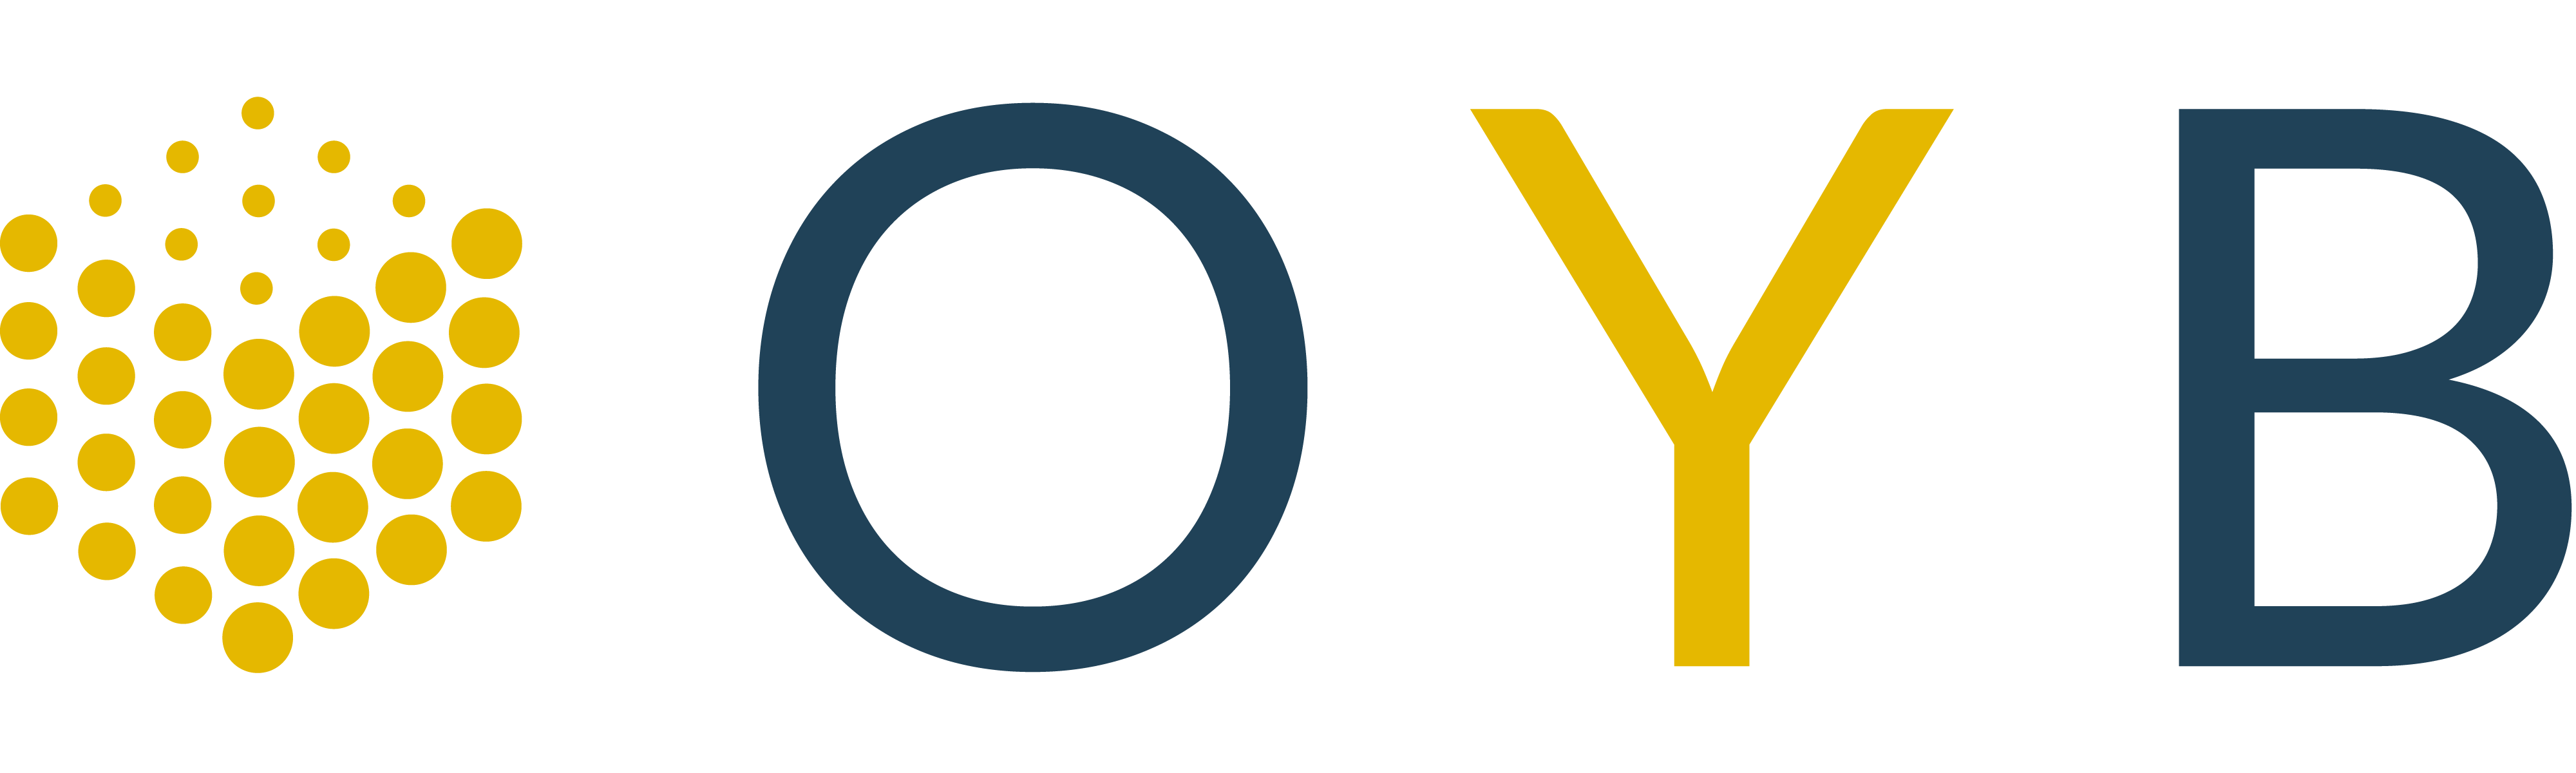 OYB - Ecosistema Ylium - Own Your Business